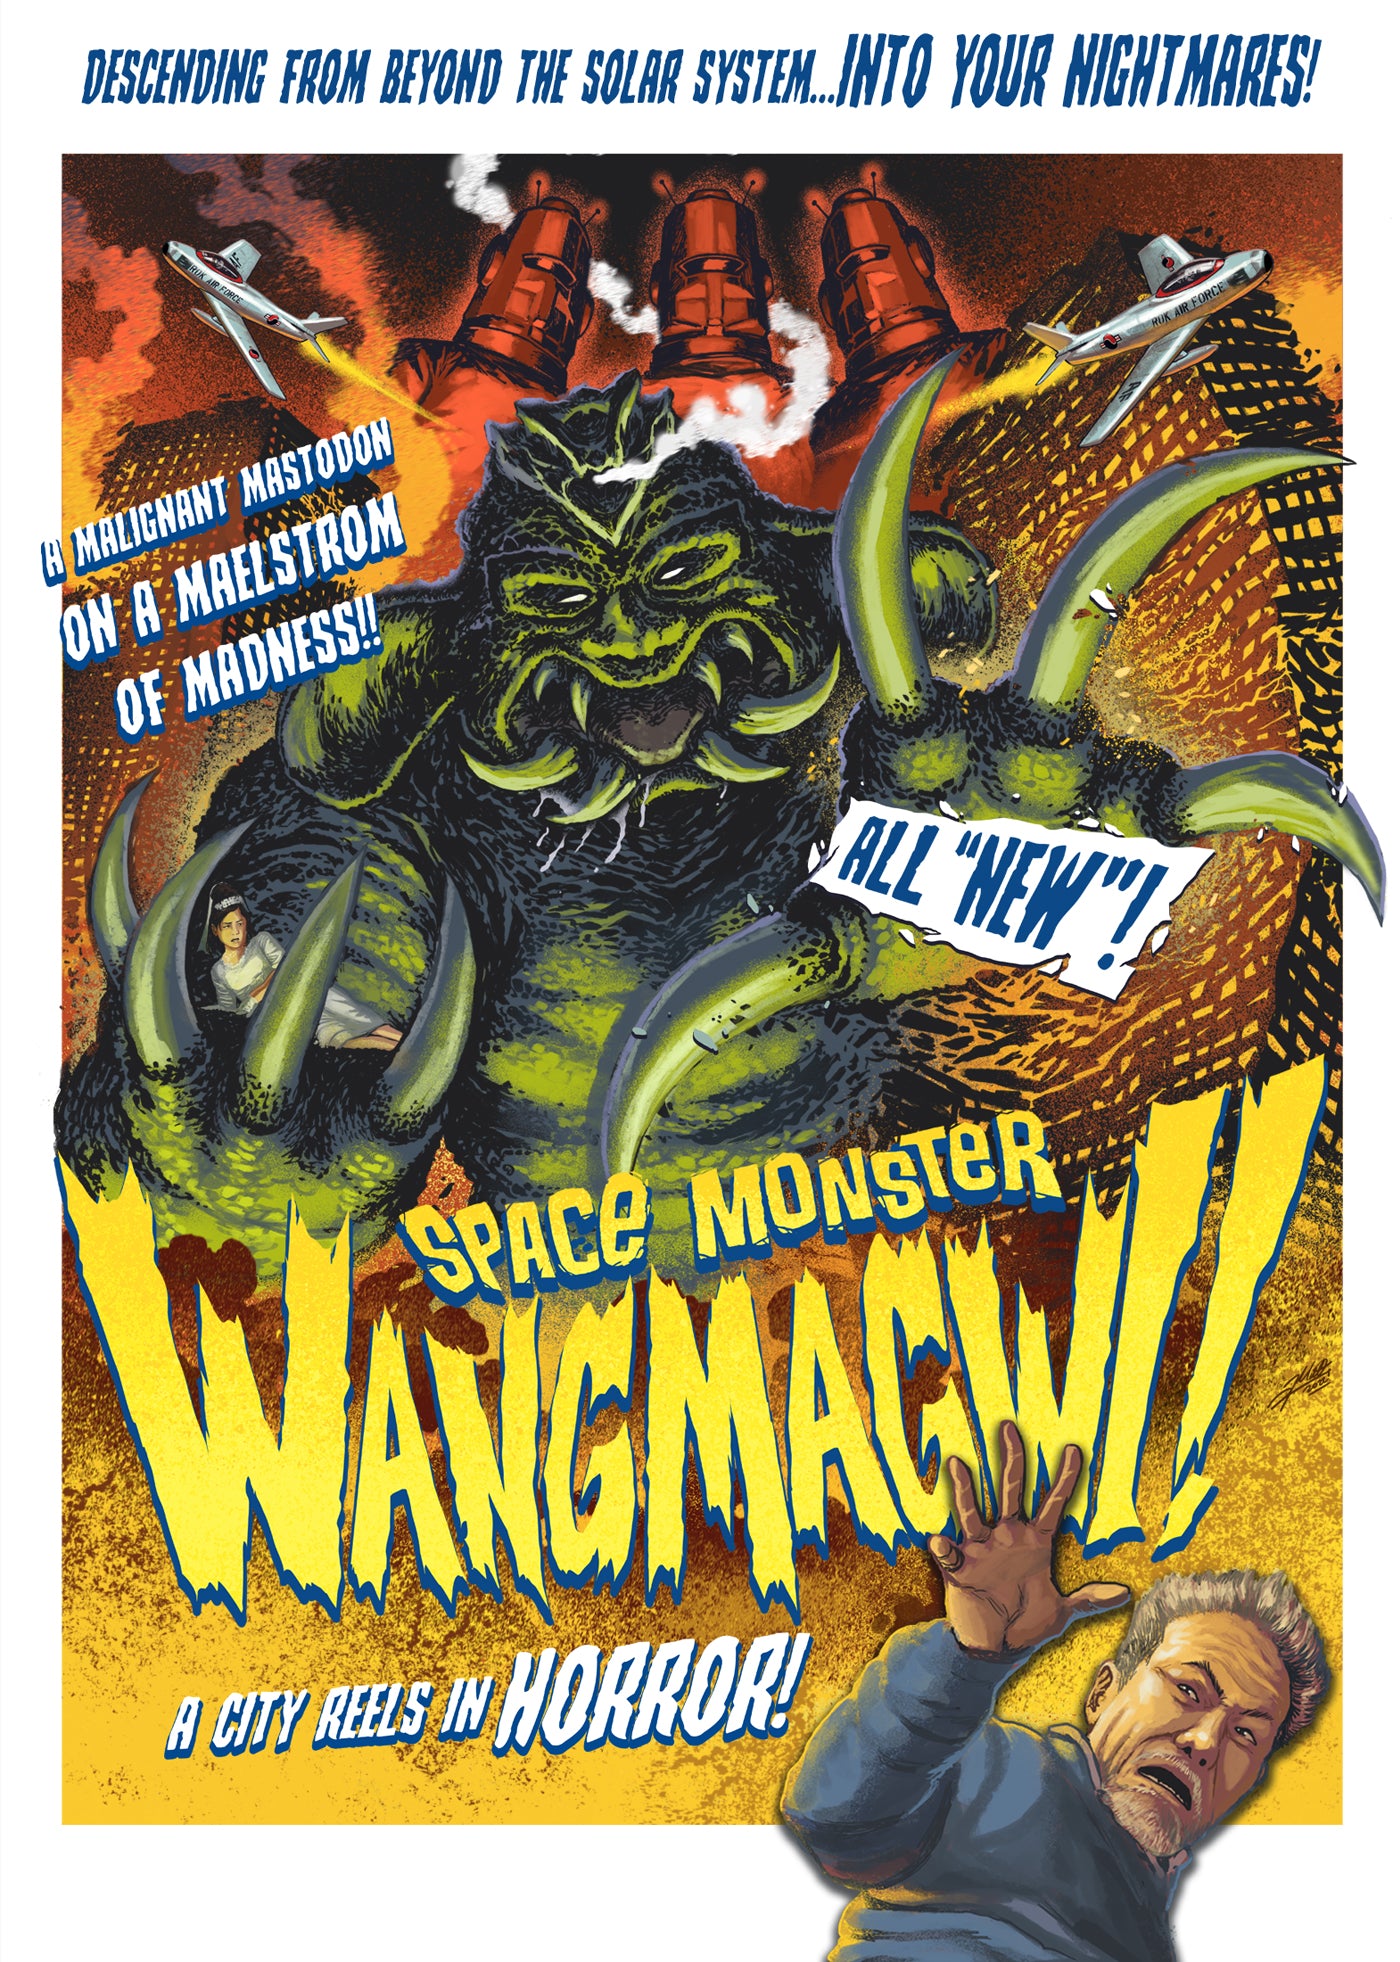 SPACE MONSTER WANGMAGWI DVD